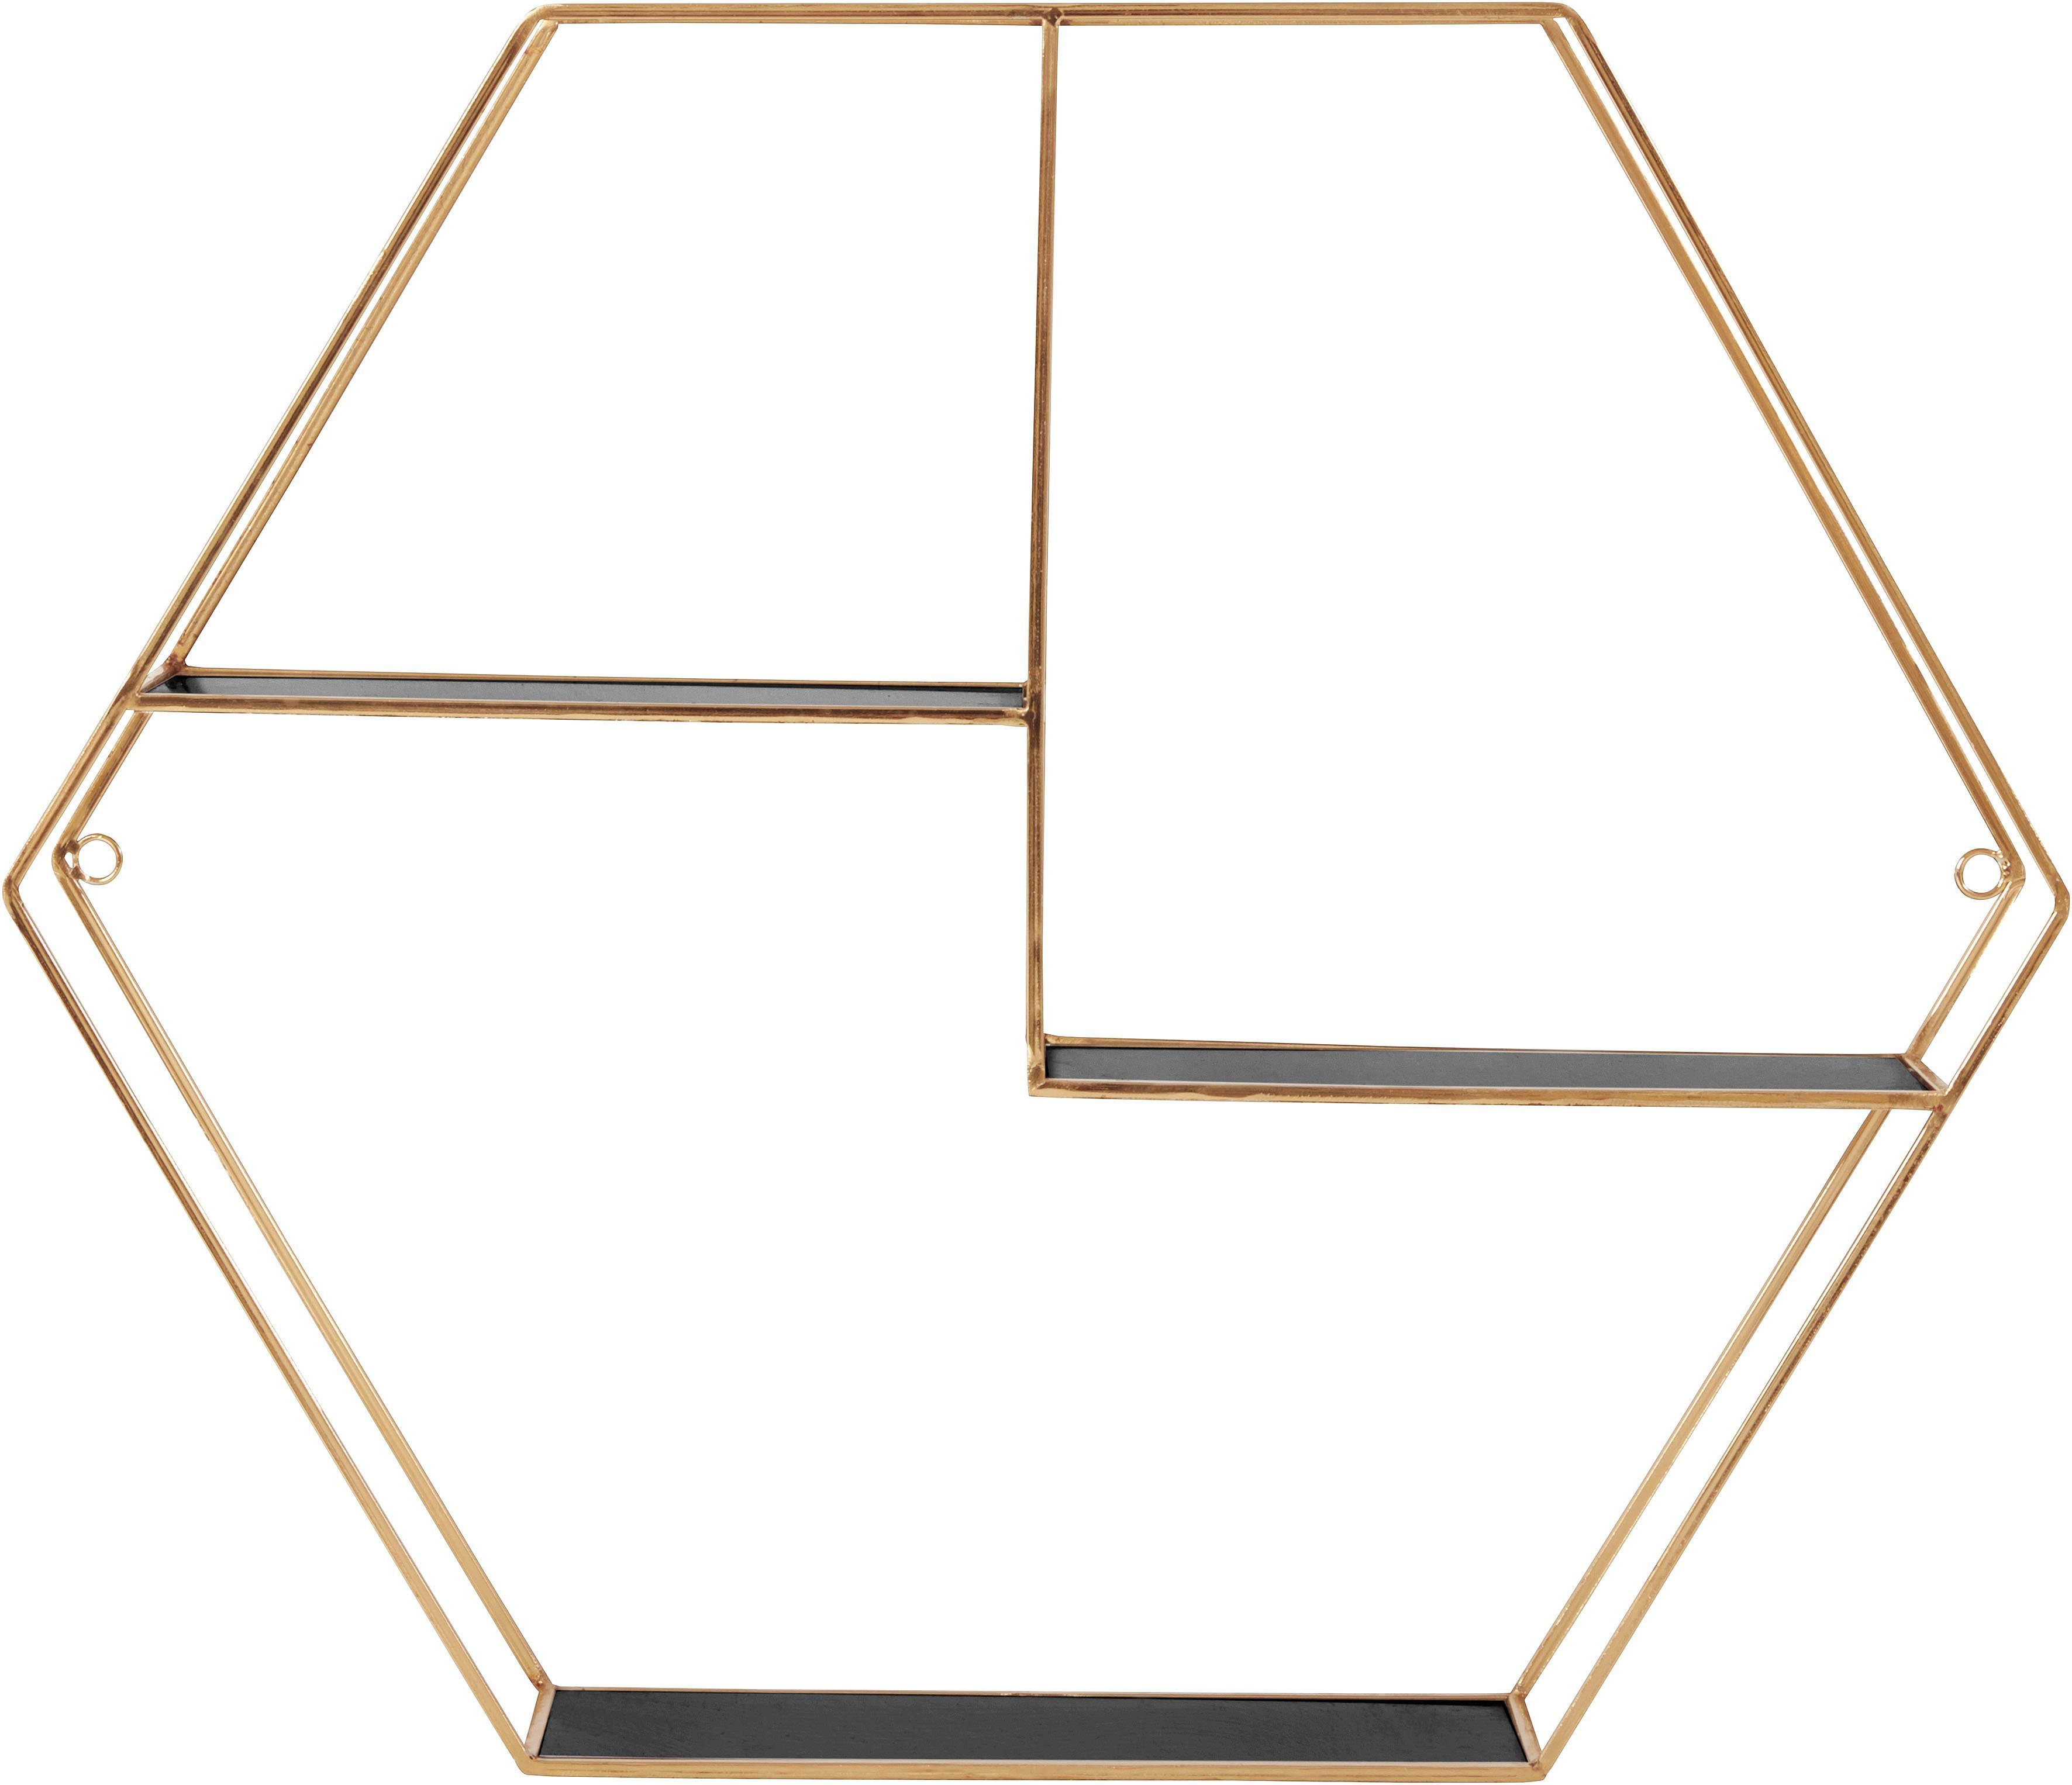 Leonique Deko-Wandregal Hexagon, in modernem Element, goldfarben, sechseckiges Design